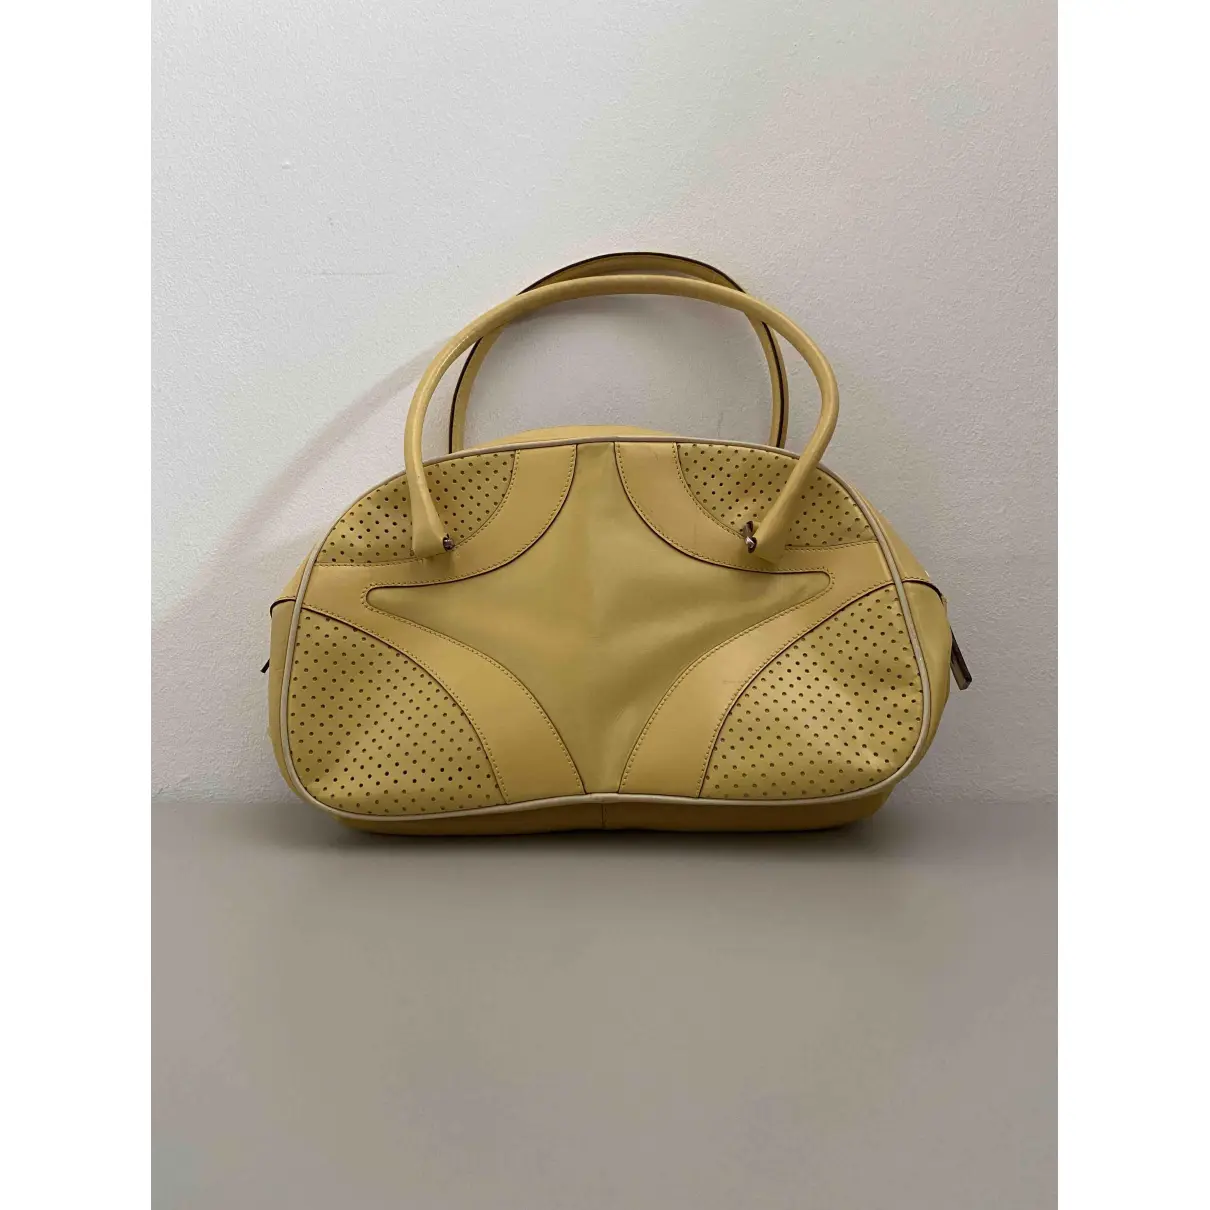 Buy Prada Bowling leather handbag online